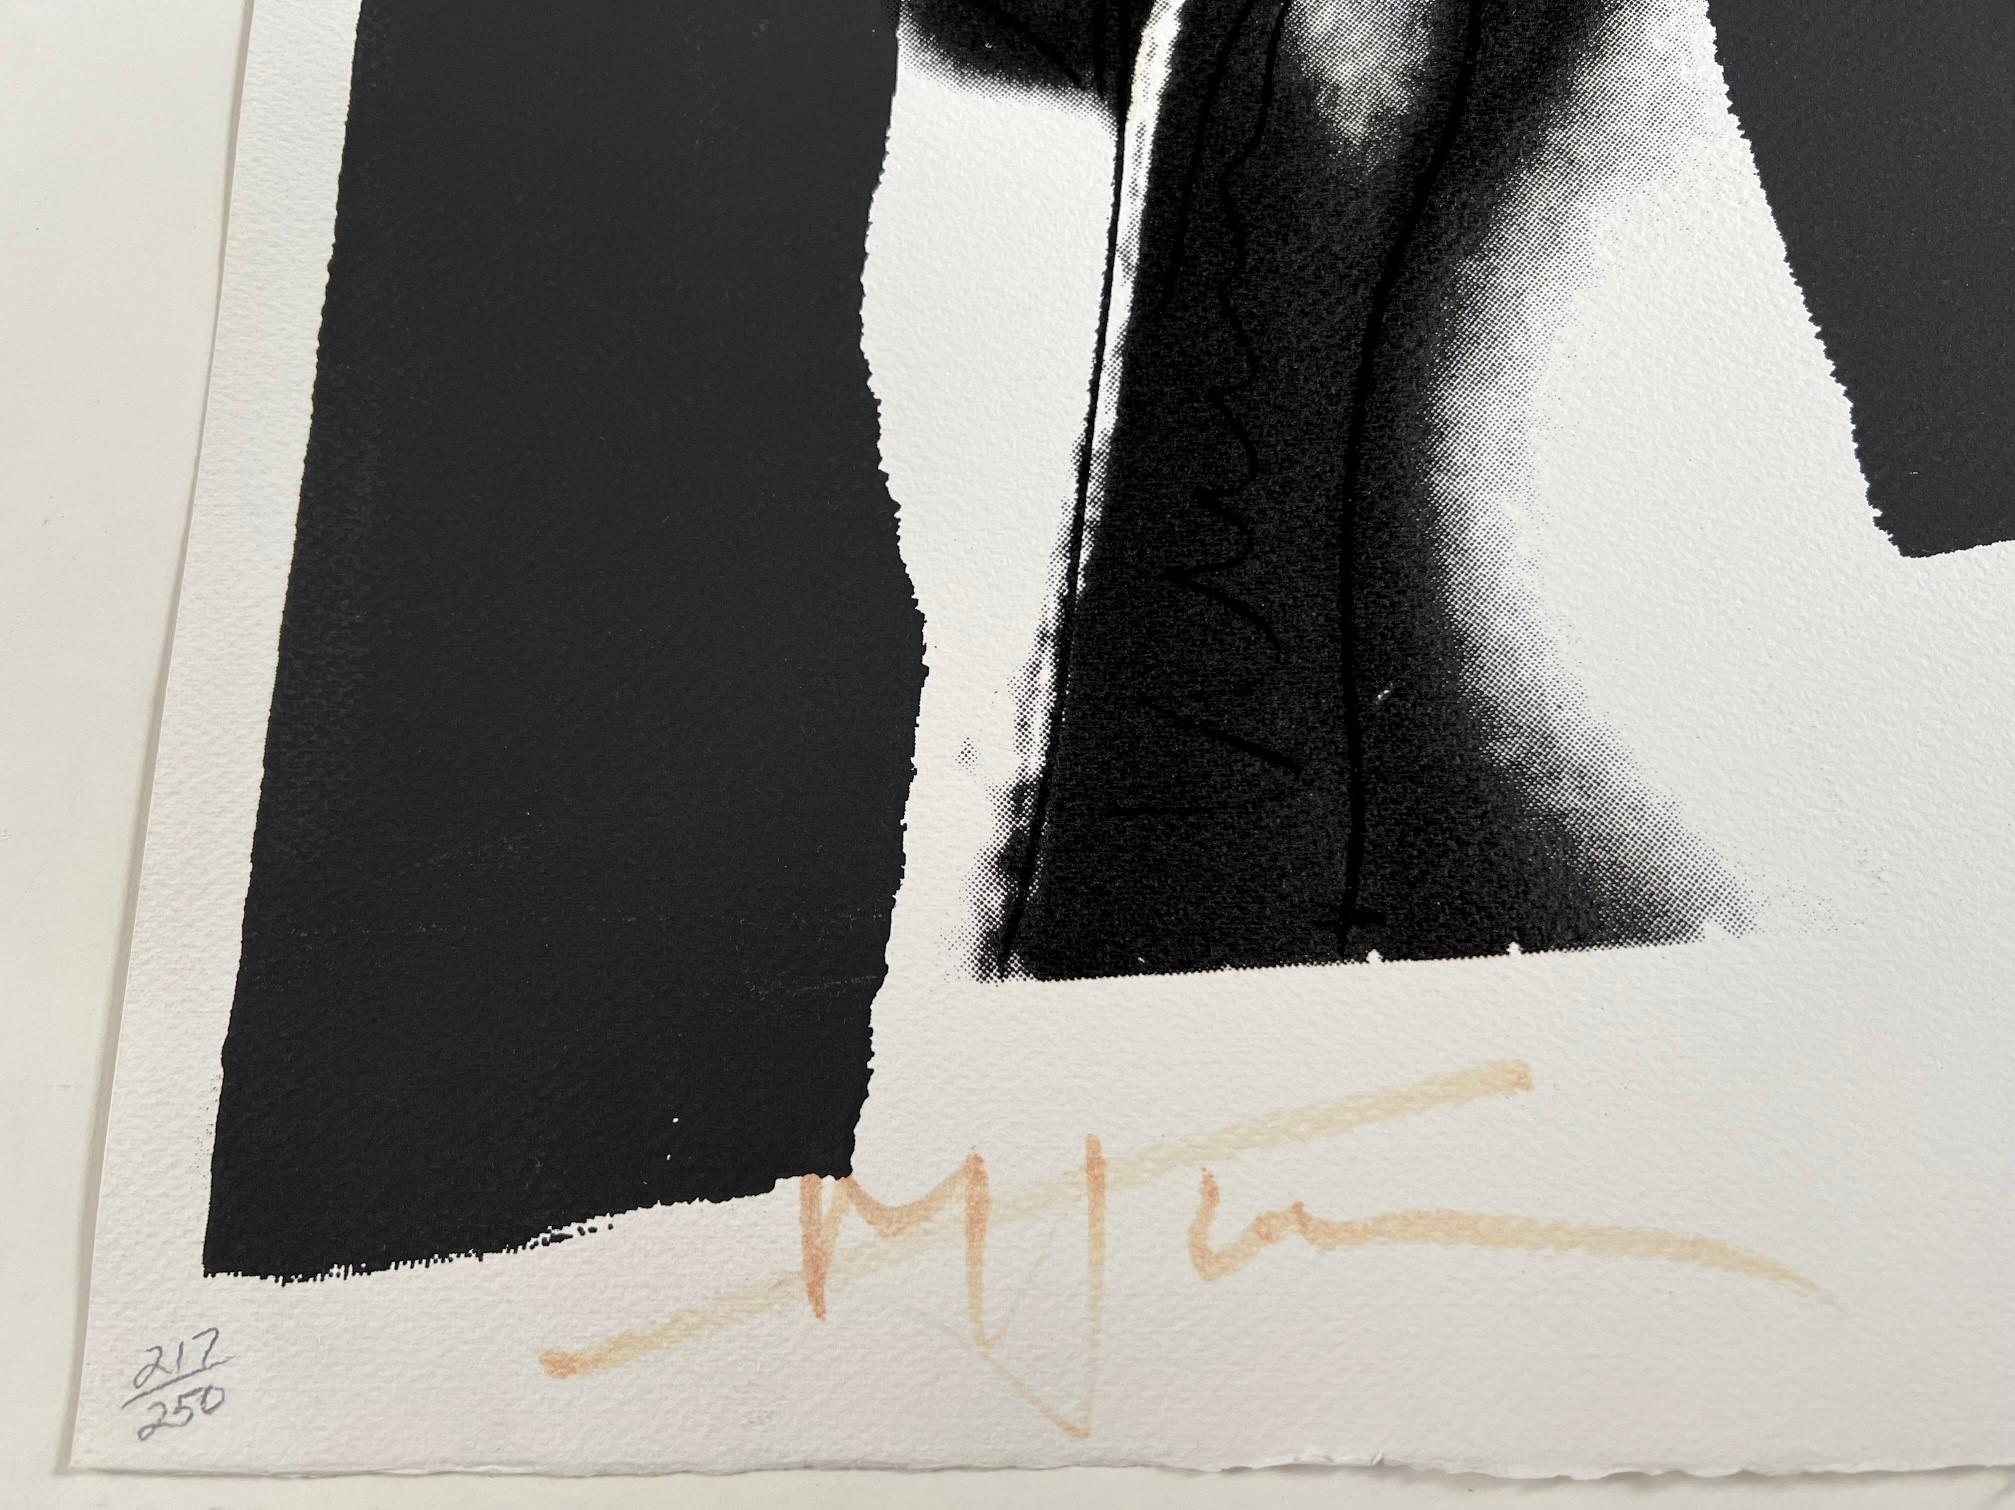 Hand signed by both Andy Warhol and Mick Jagger. Numbered limited edition screenprint. Printer: Alexander Heinrici, New York. Publisher: Seabird Editions, London, England. Andy Warhol Prints A Catalogue Raisonné Feldman/Schellmann Catalogue Raisonne